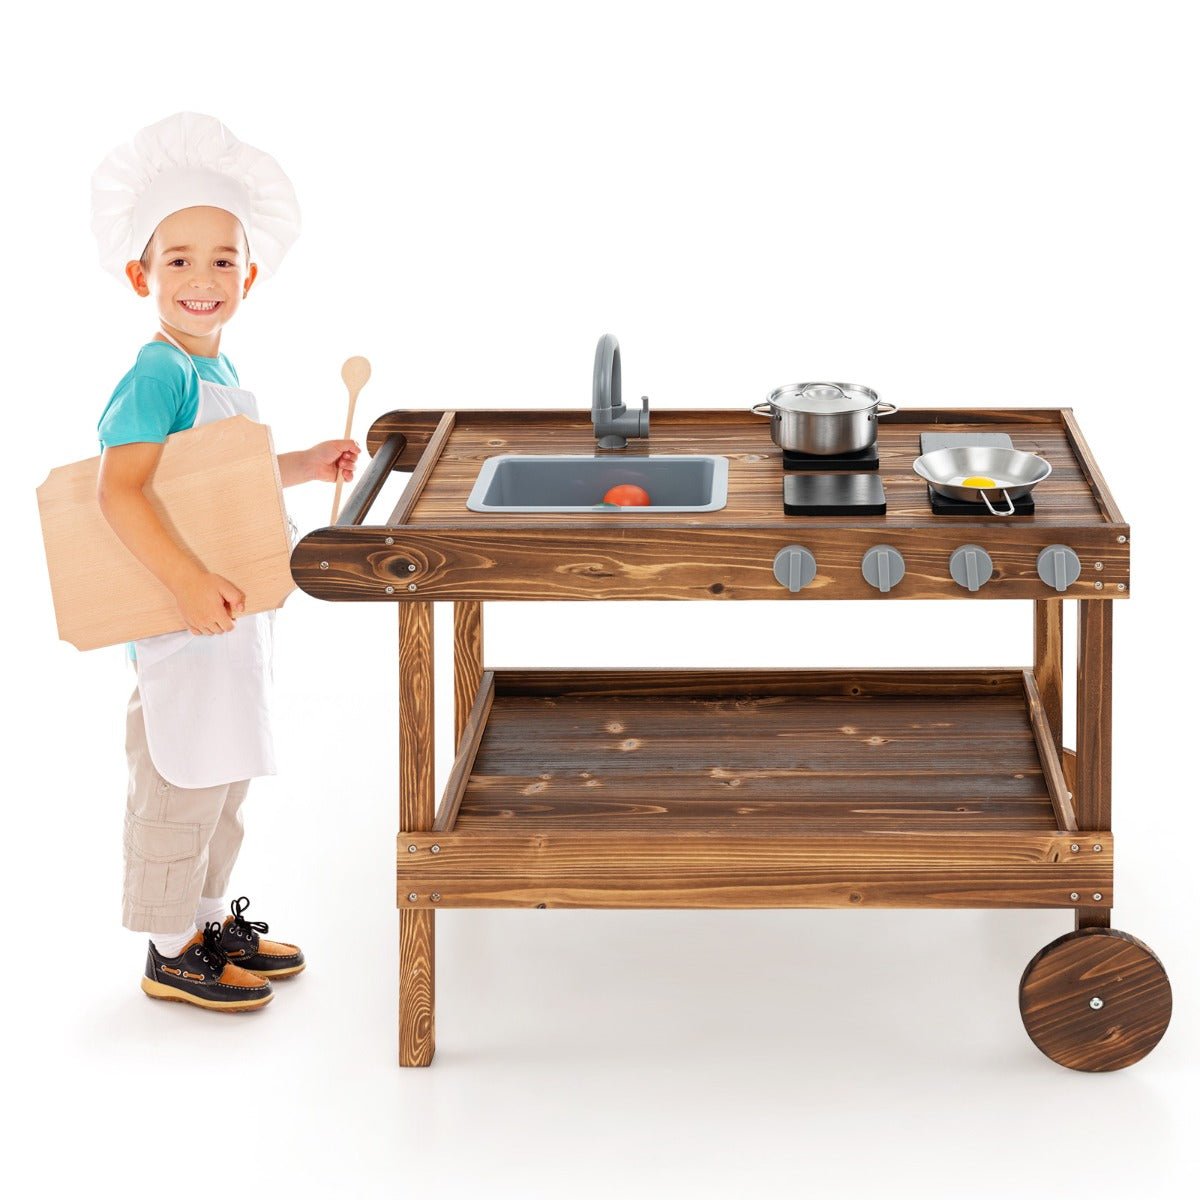 Wooden Mud Kitchen Set with Removable Sink for Children 3+ Years Old - Kids Mega Mart